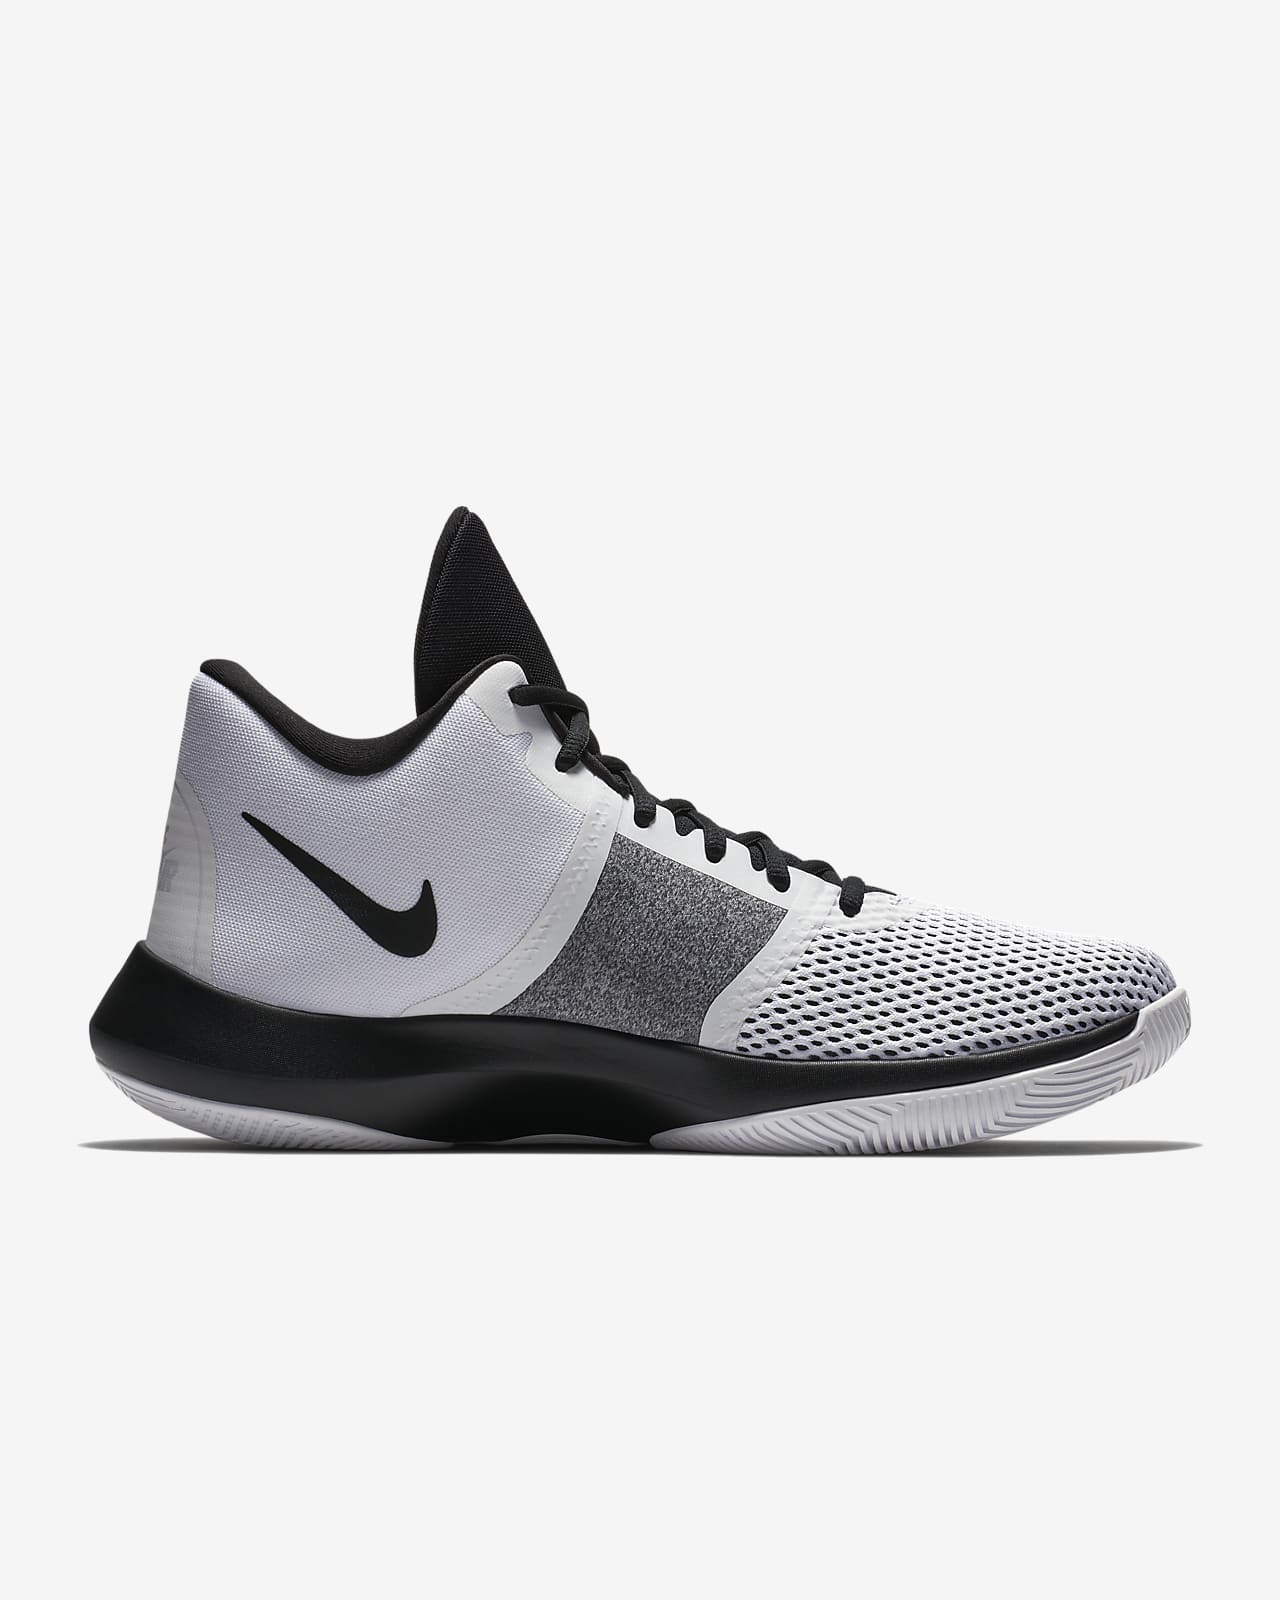 nike basketball shoes white and black